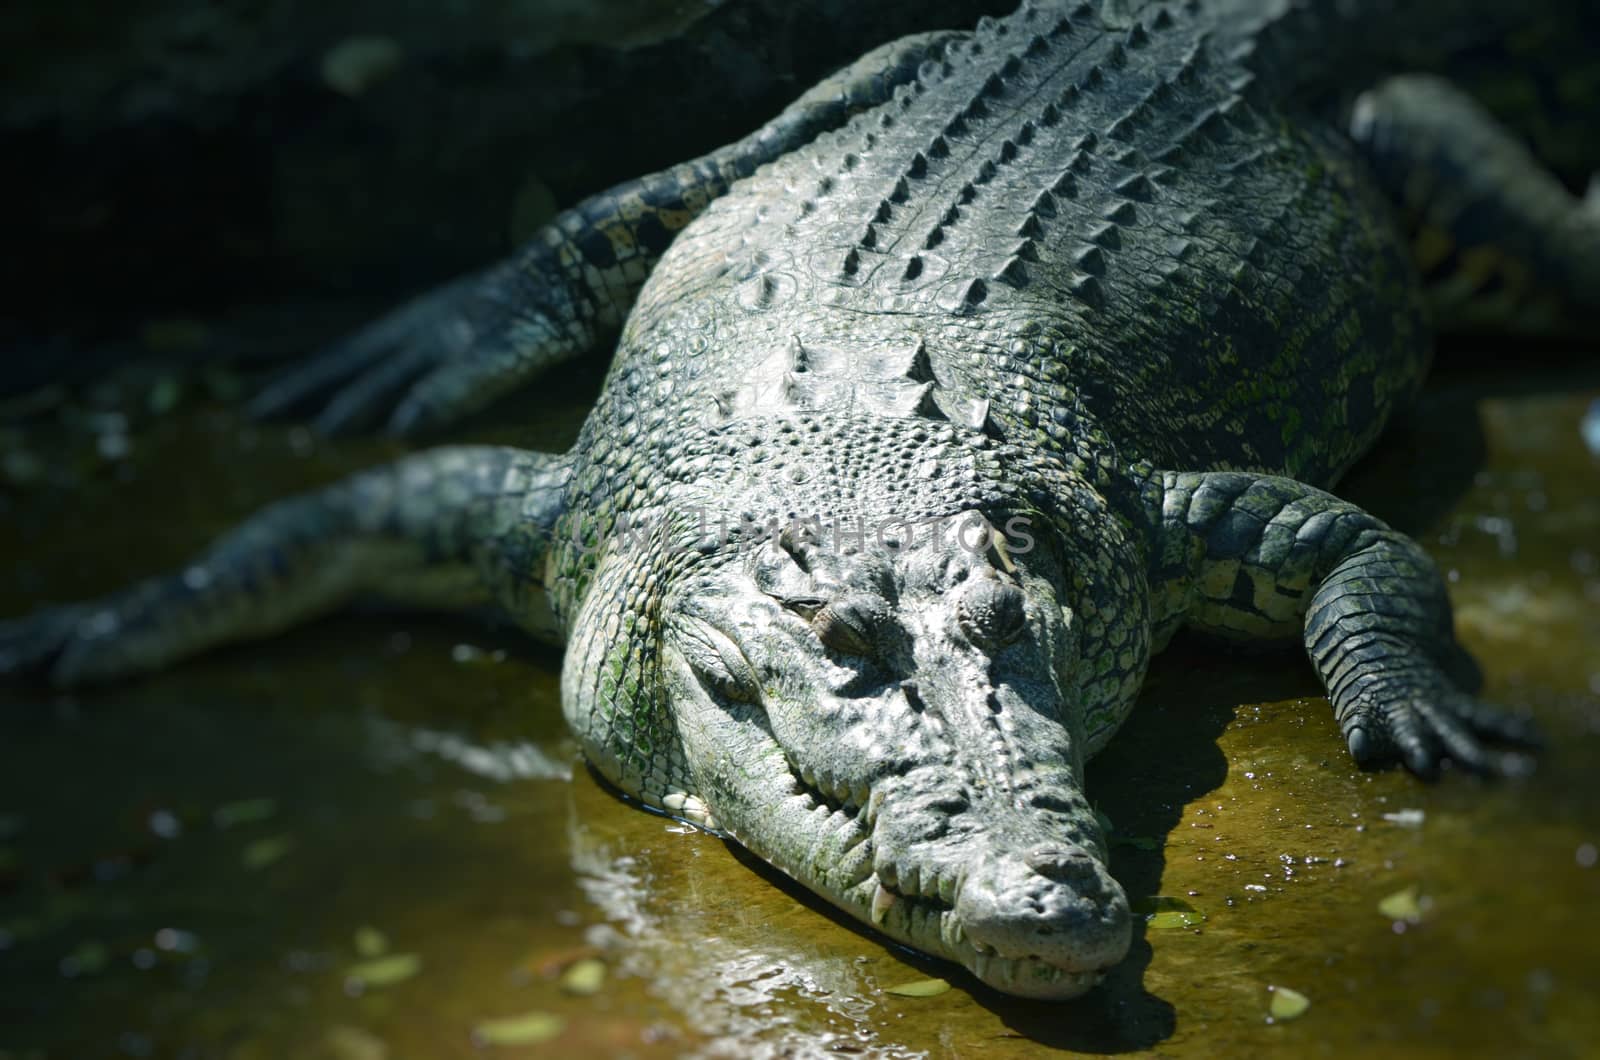 Nile Crocodile very closeup image capture.